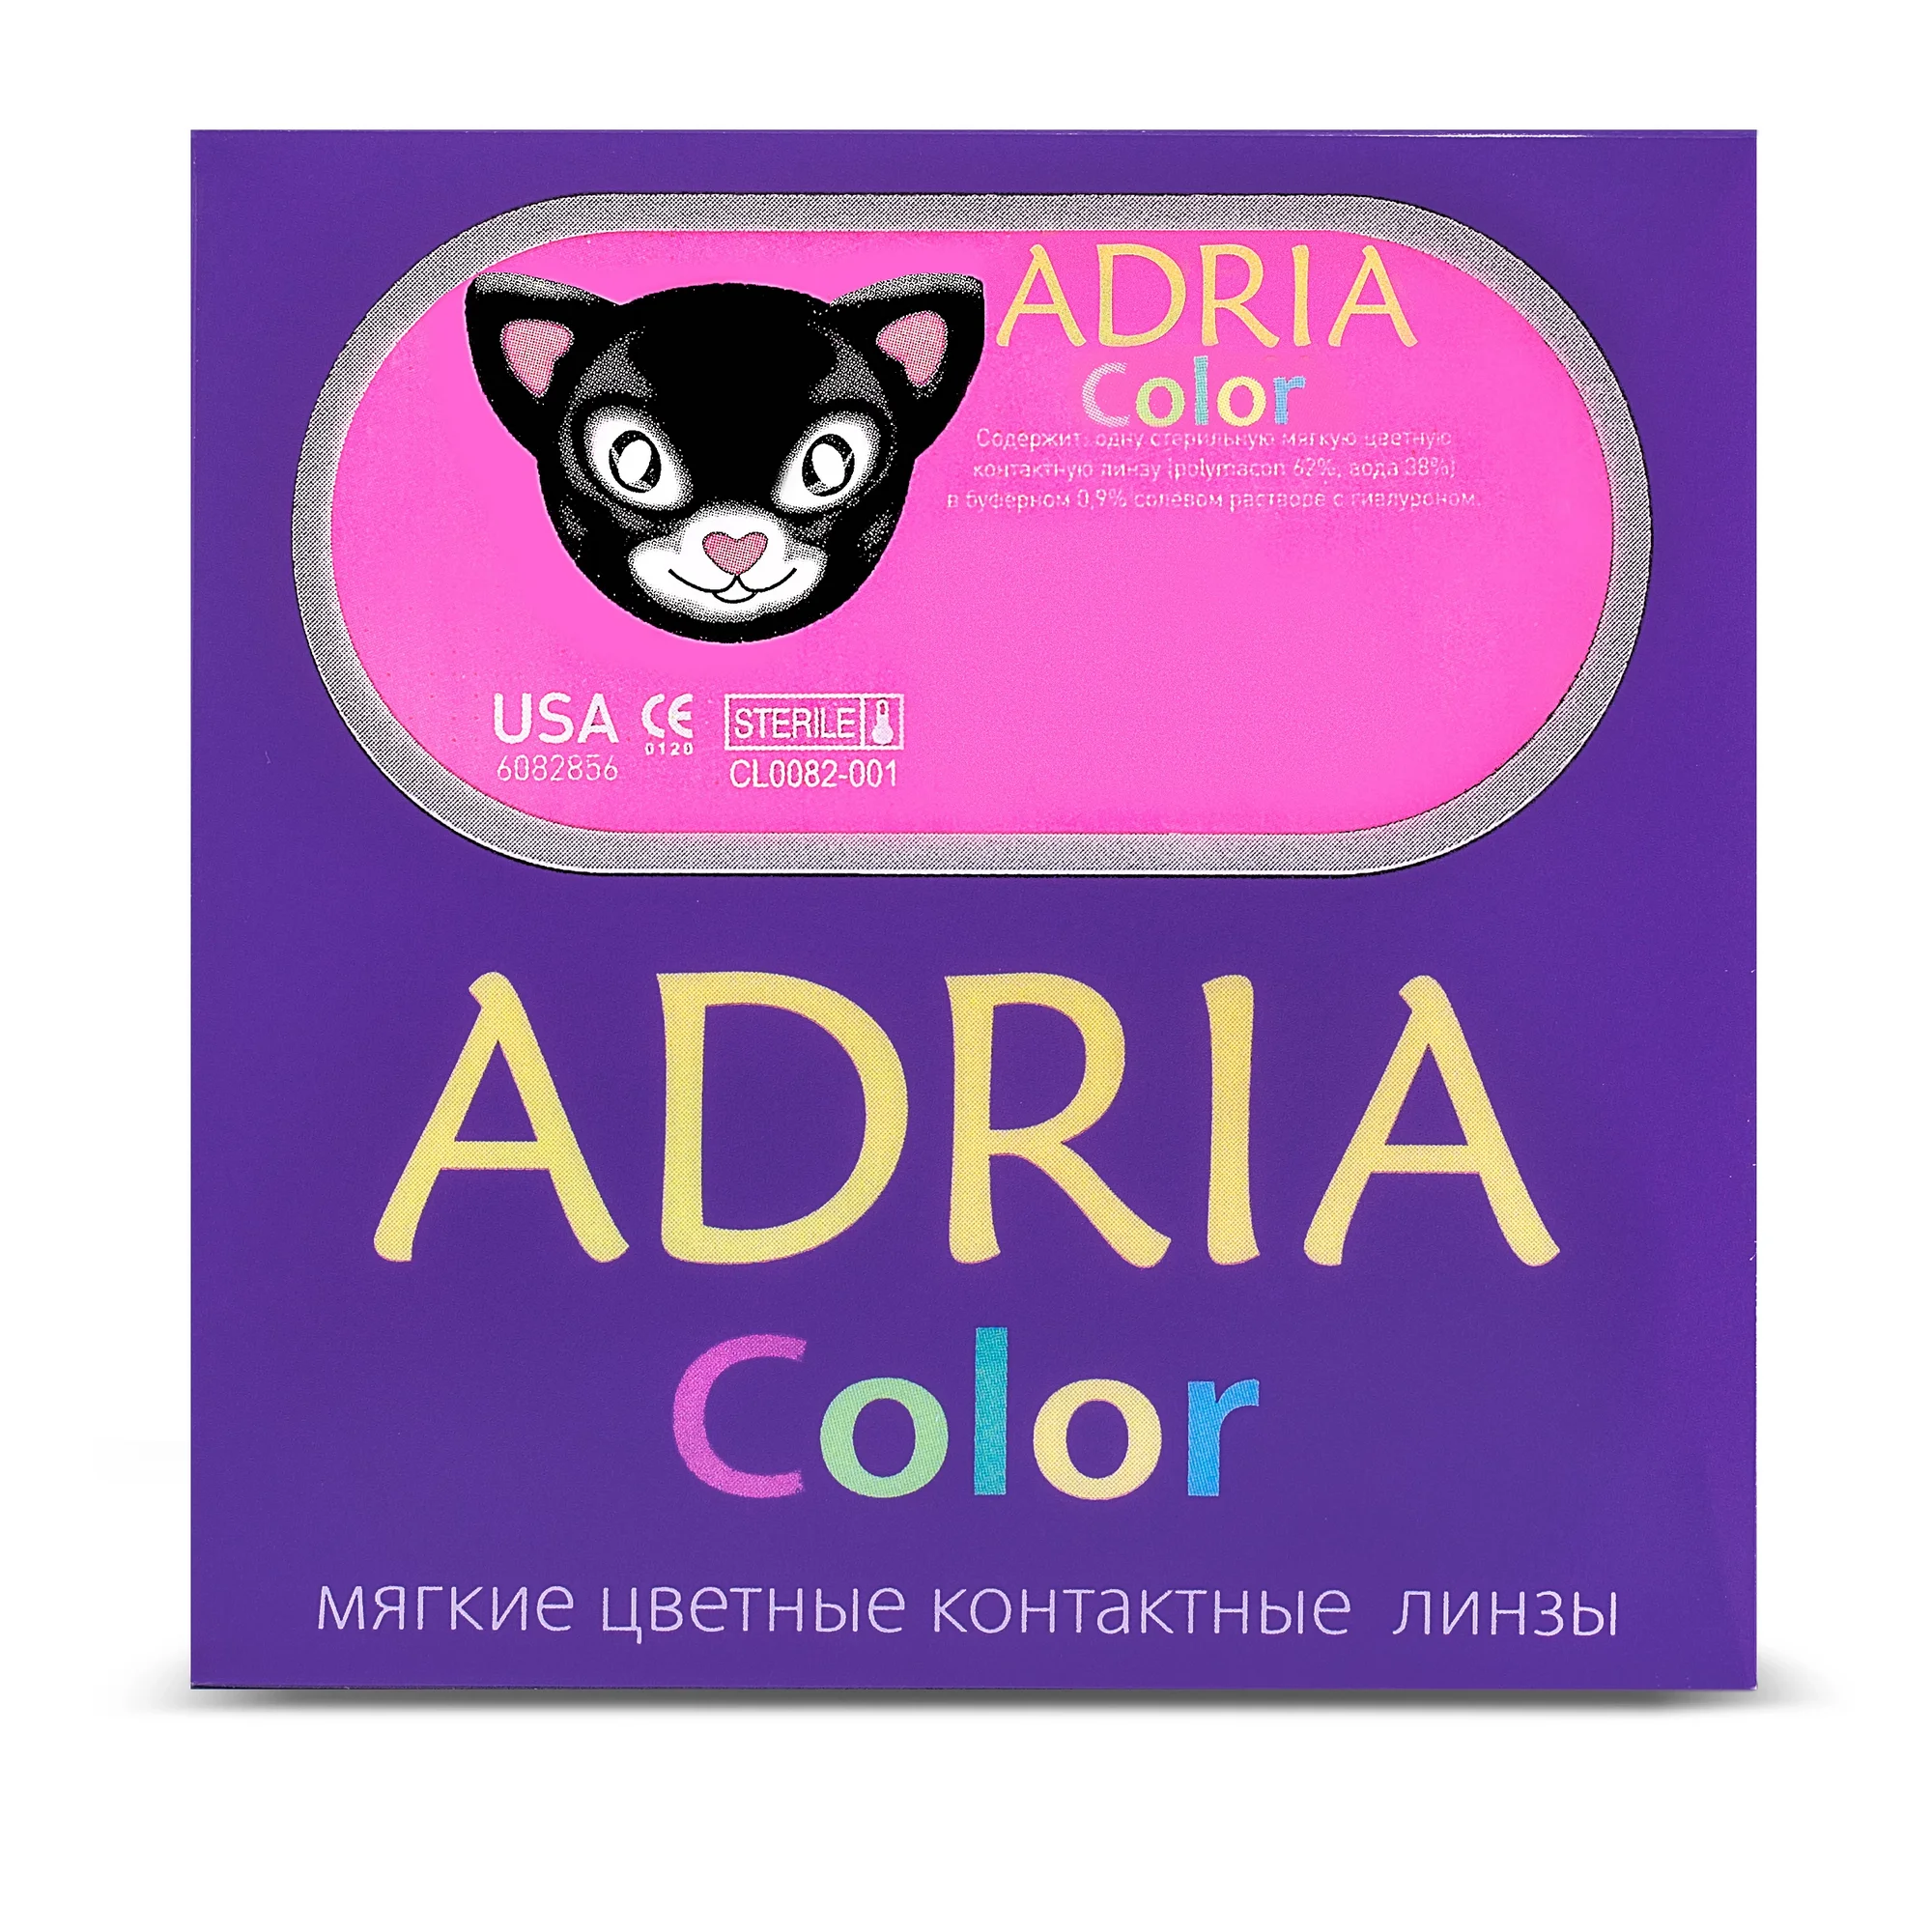 COLOR BOX ADRIA Color 3 Tone True Sapphire (сапфир)